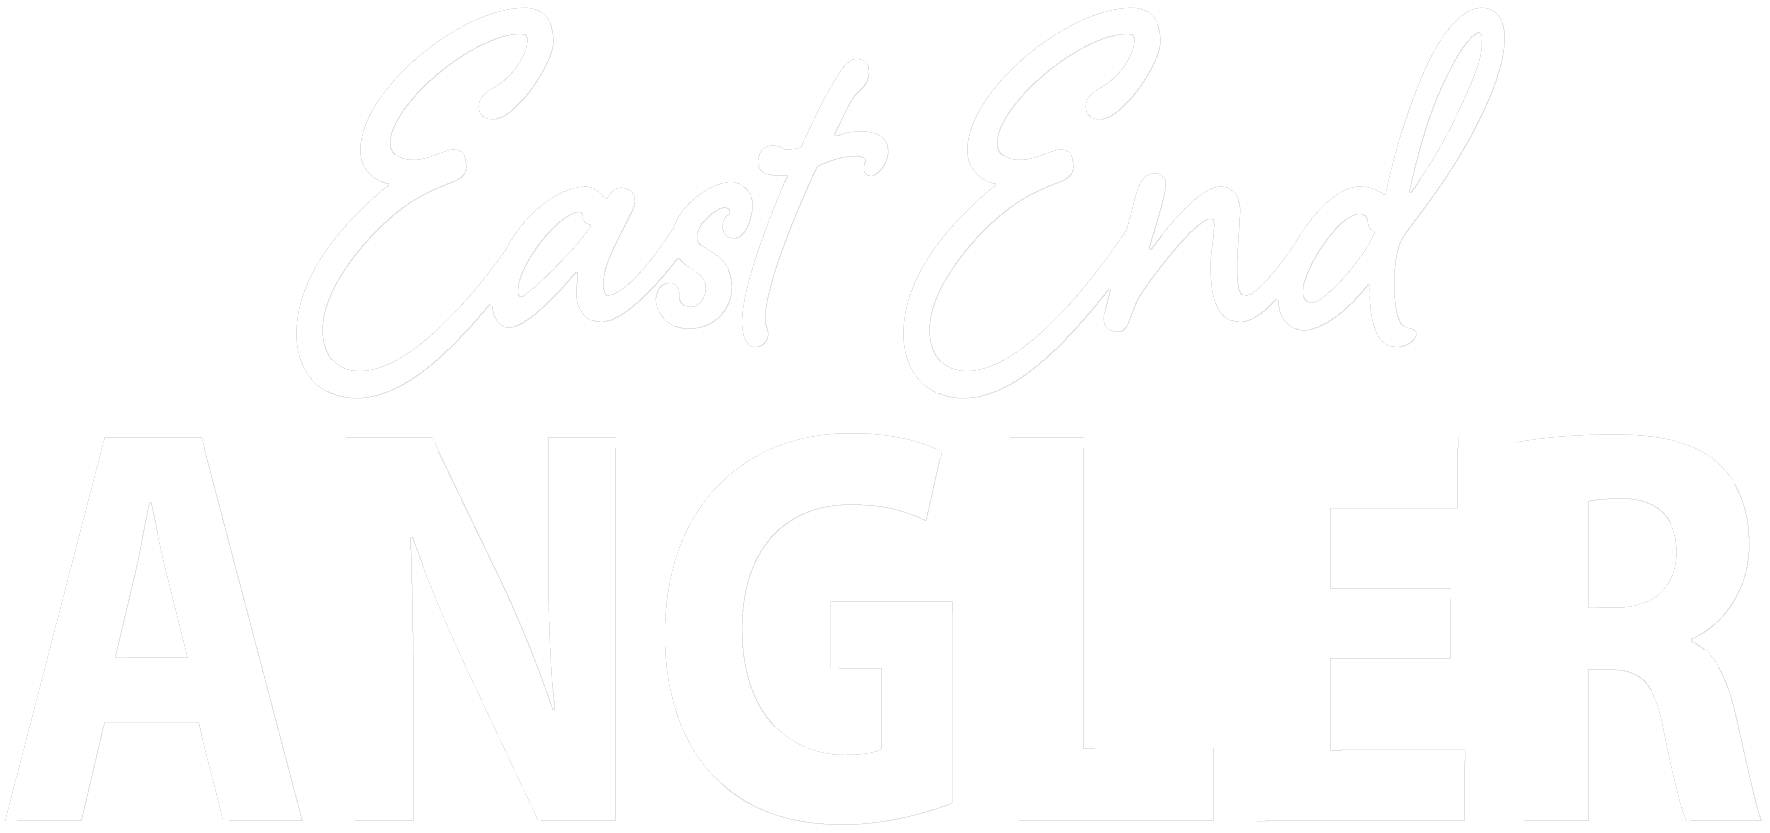 East End Anglers